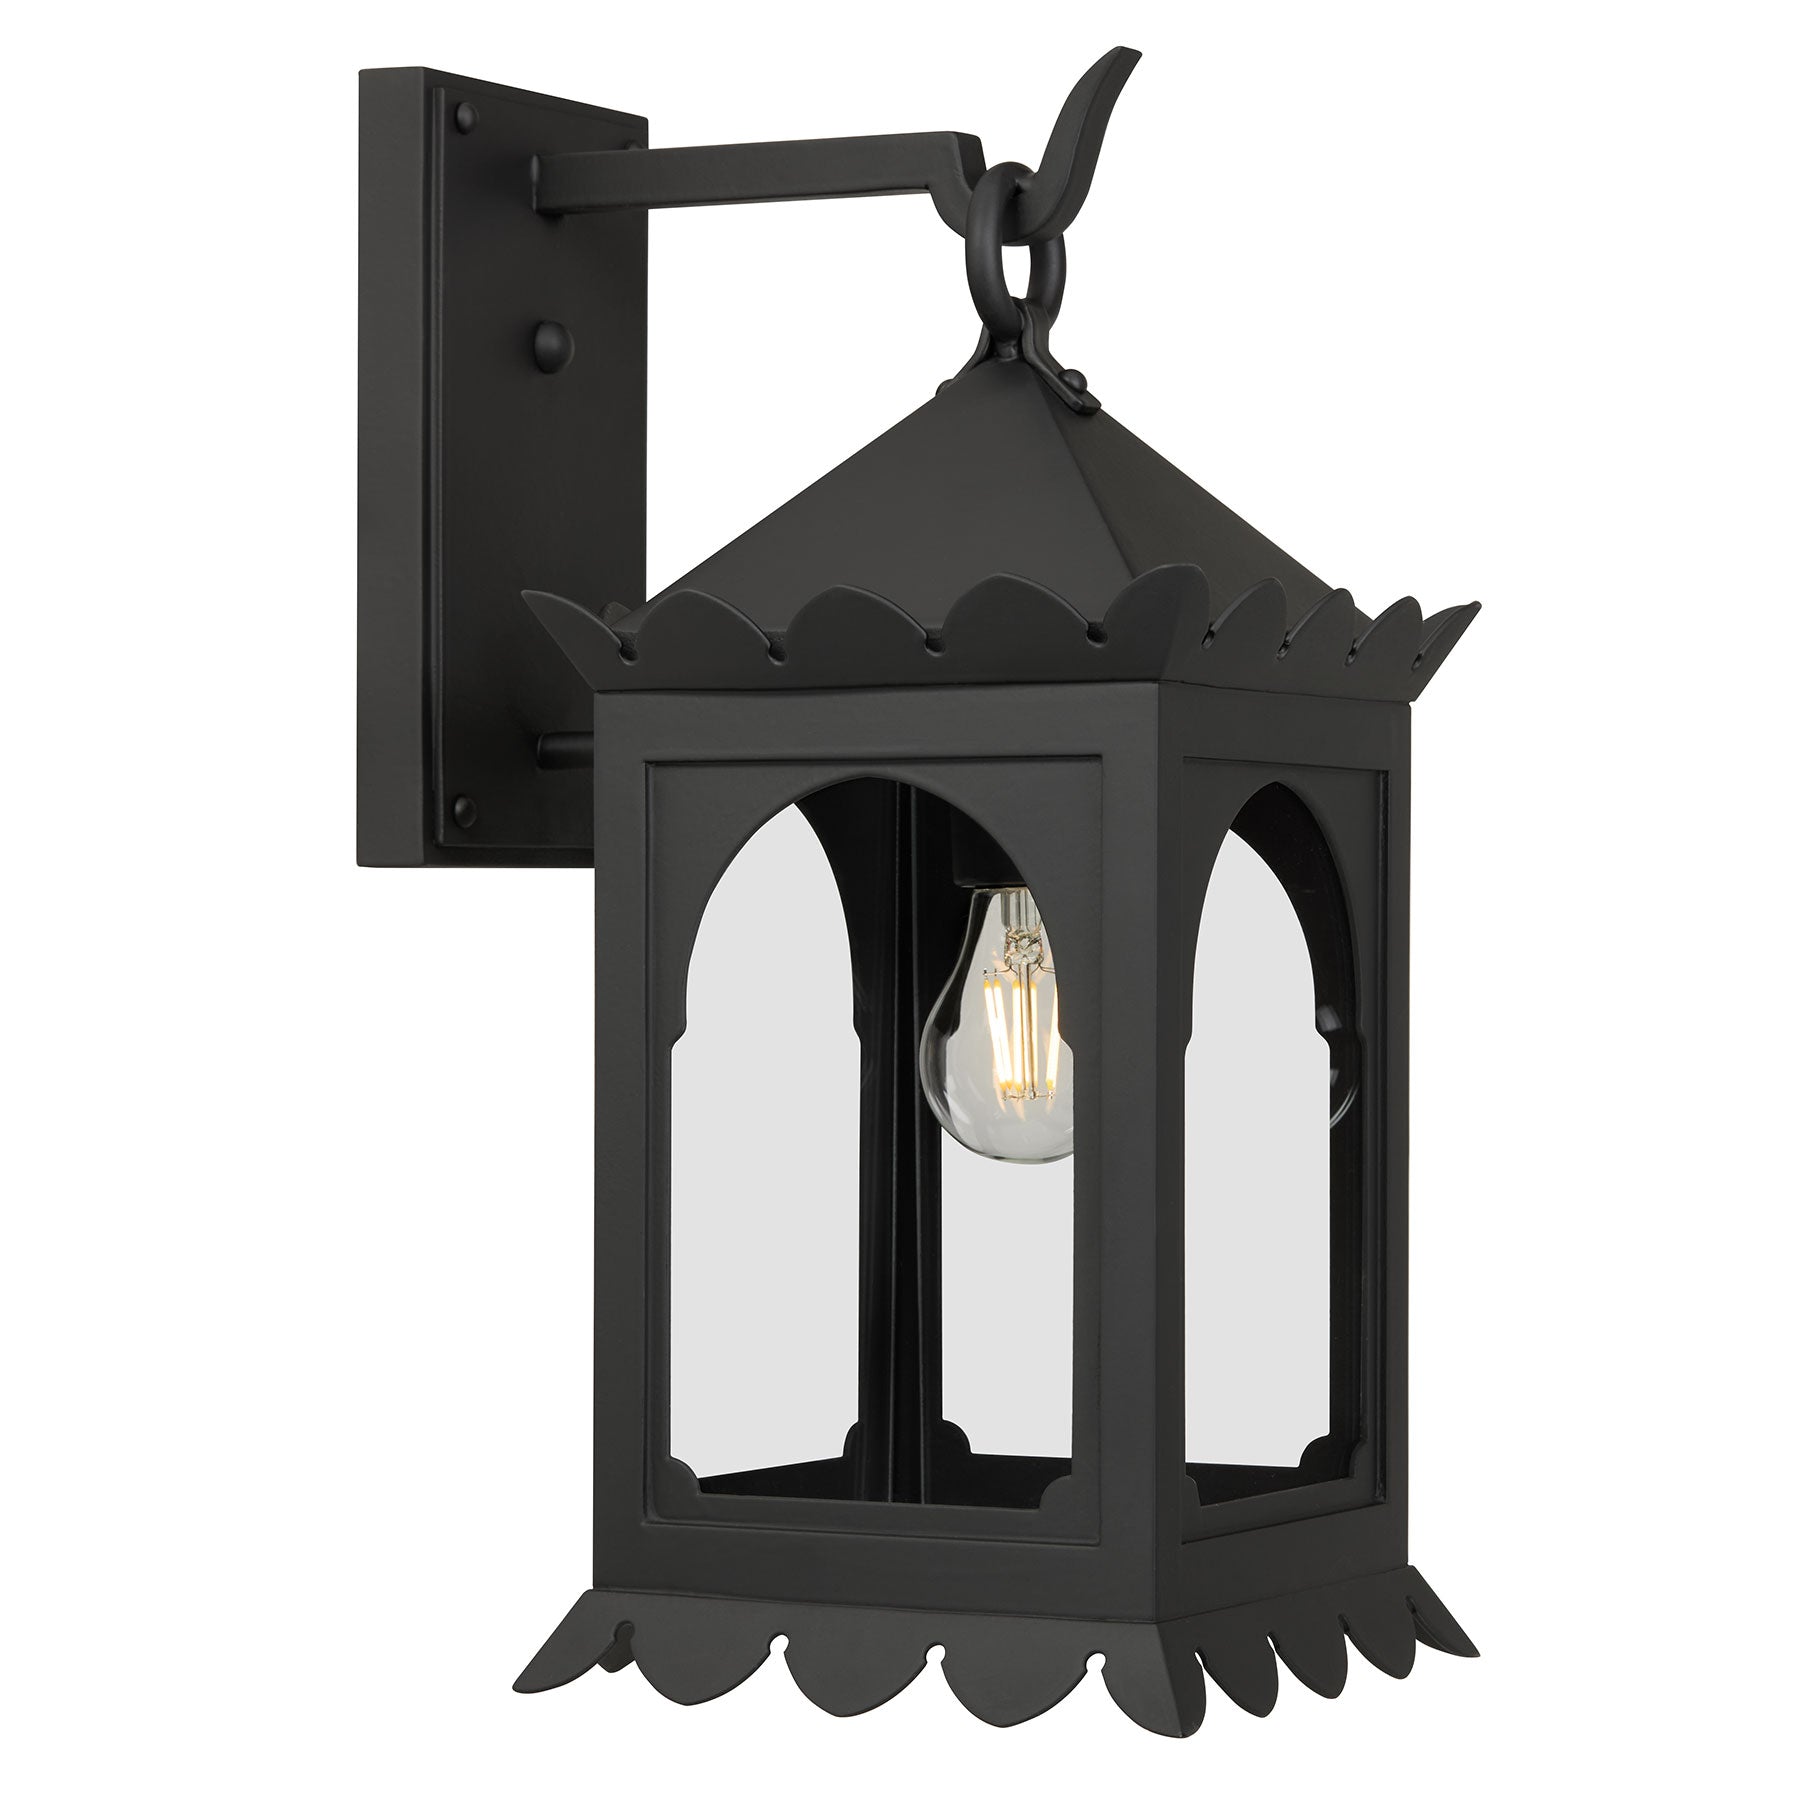 The Zara | Moorish Style Exterior Light Fixture by Santa Barbara Lighting Company | Exterior Handmade Lighting